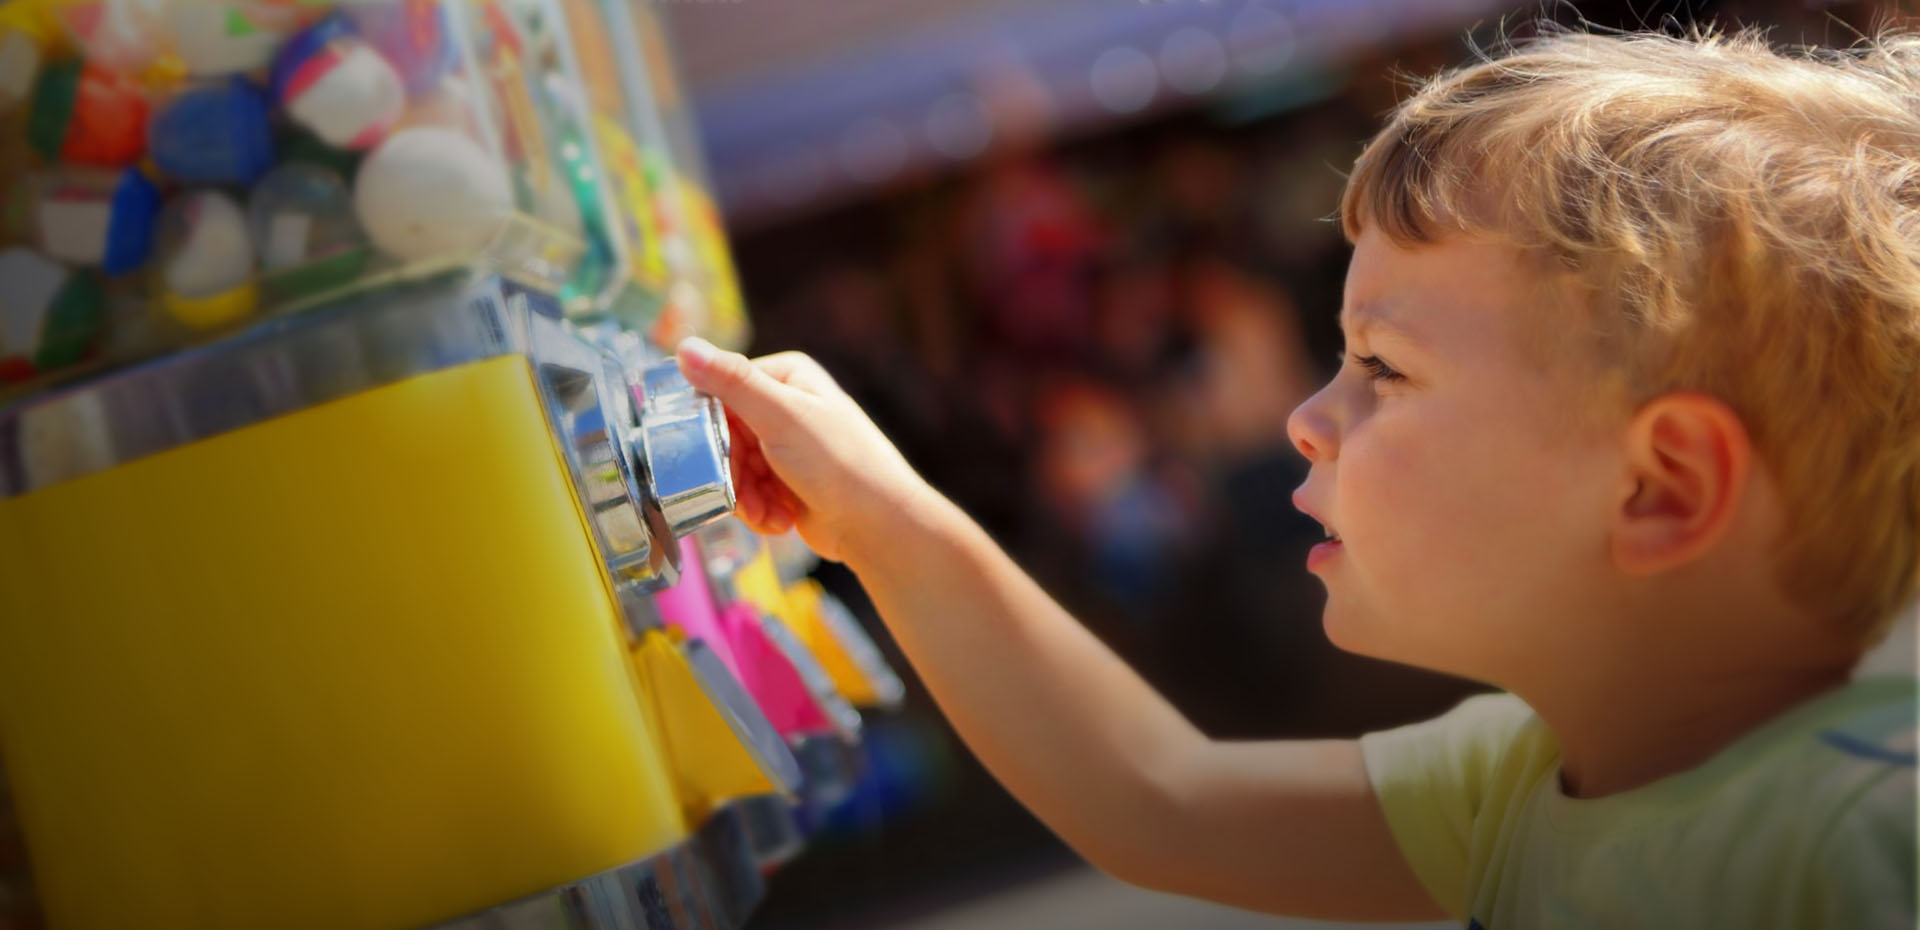 Installers Of Toys Vending Machines For Restaurants Stamford